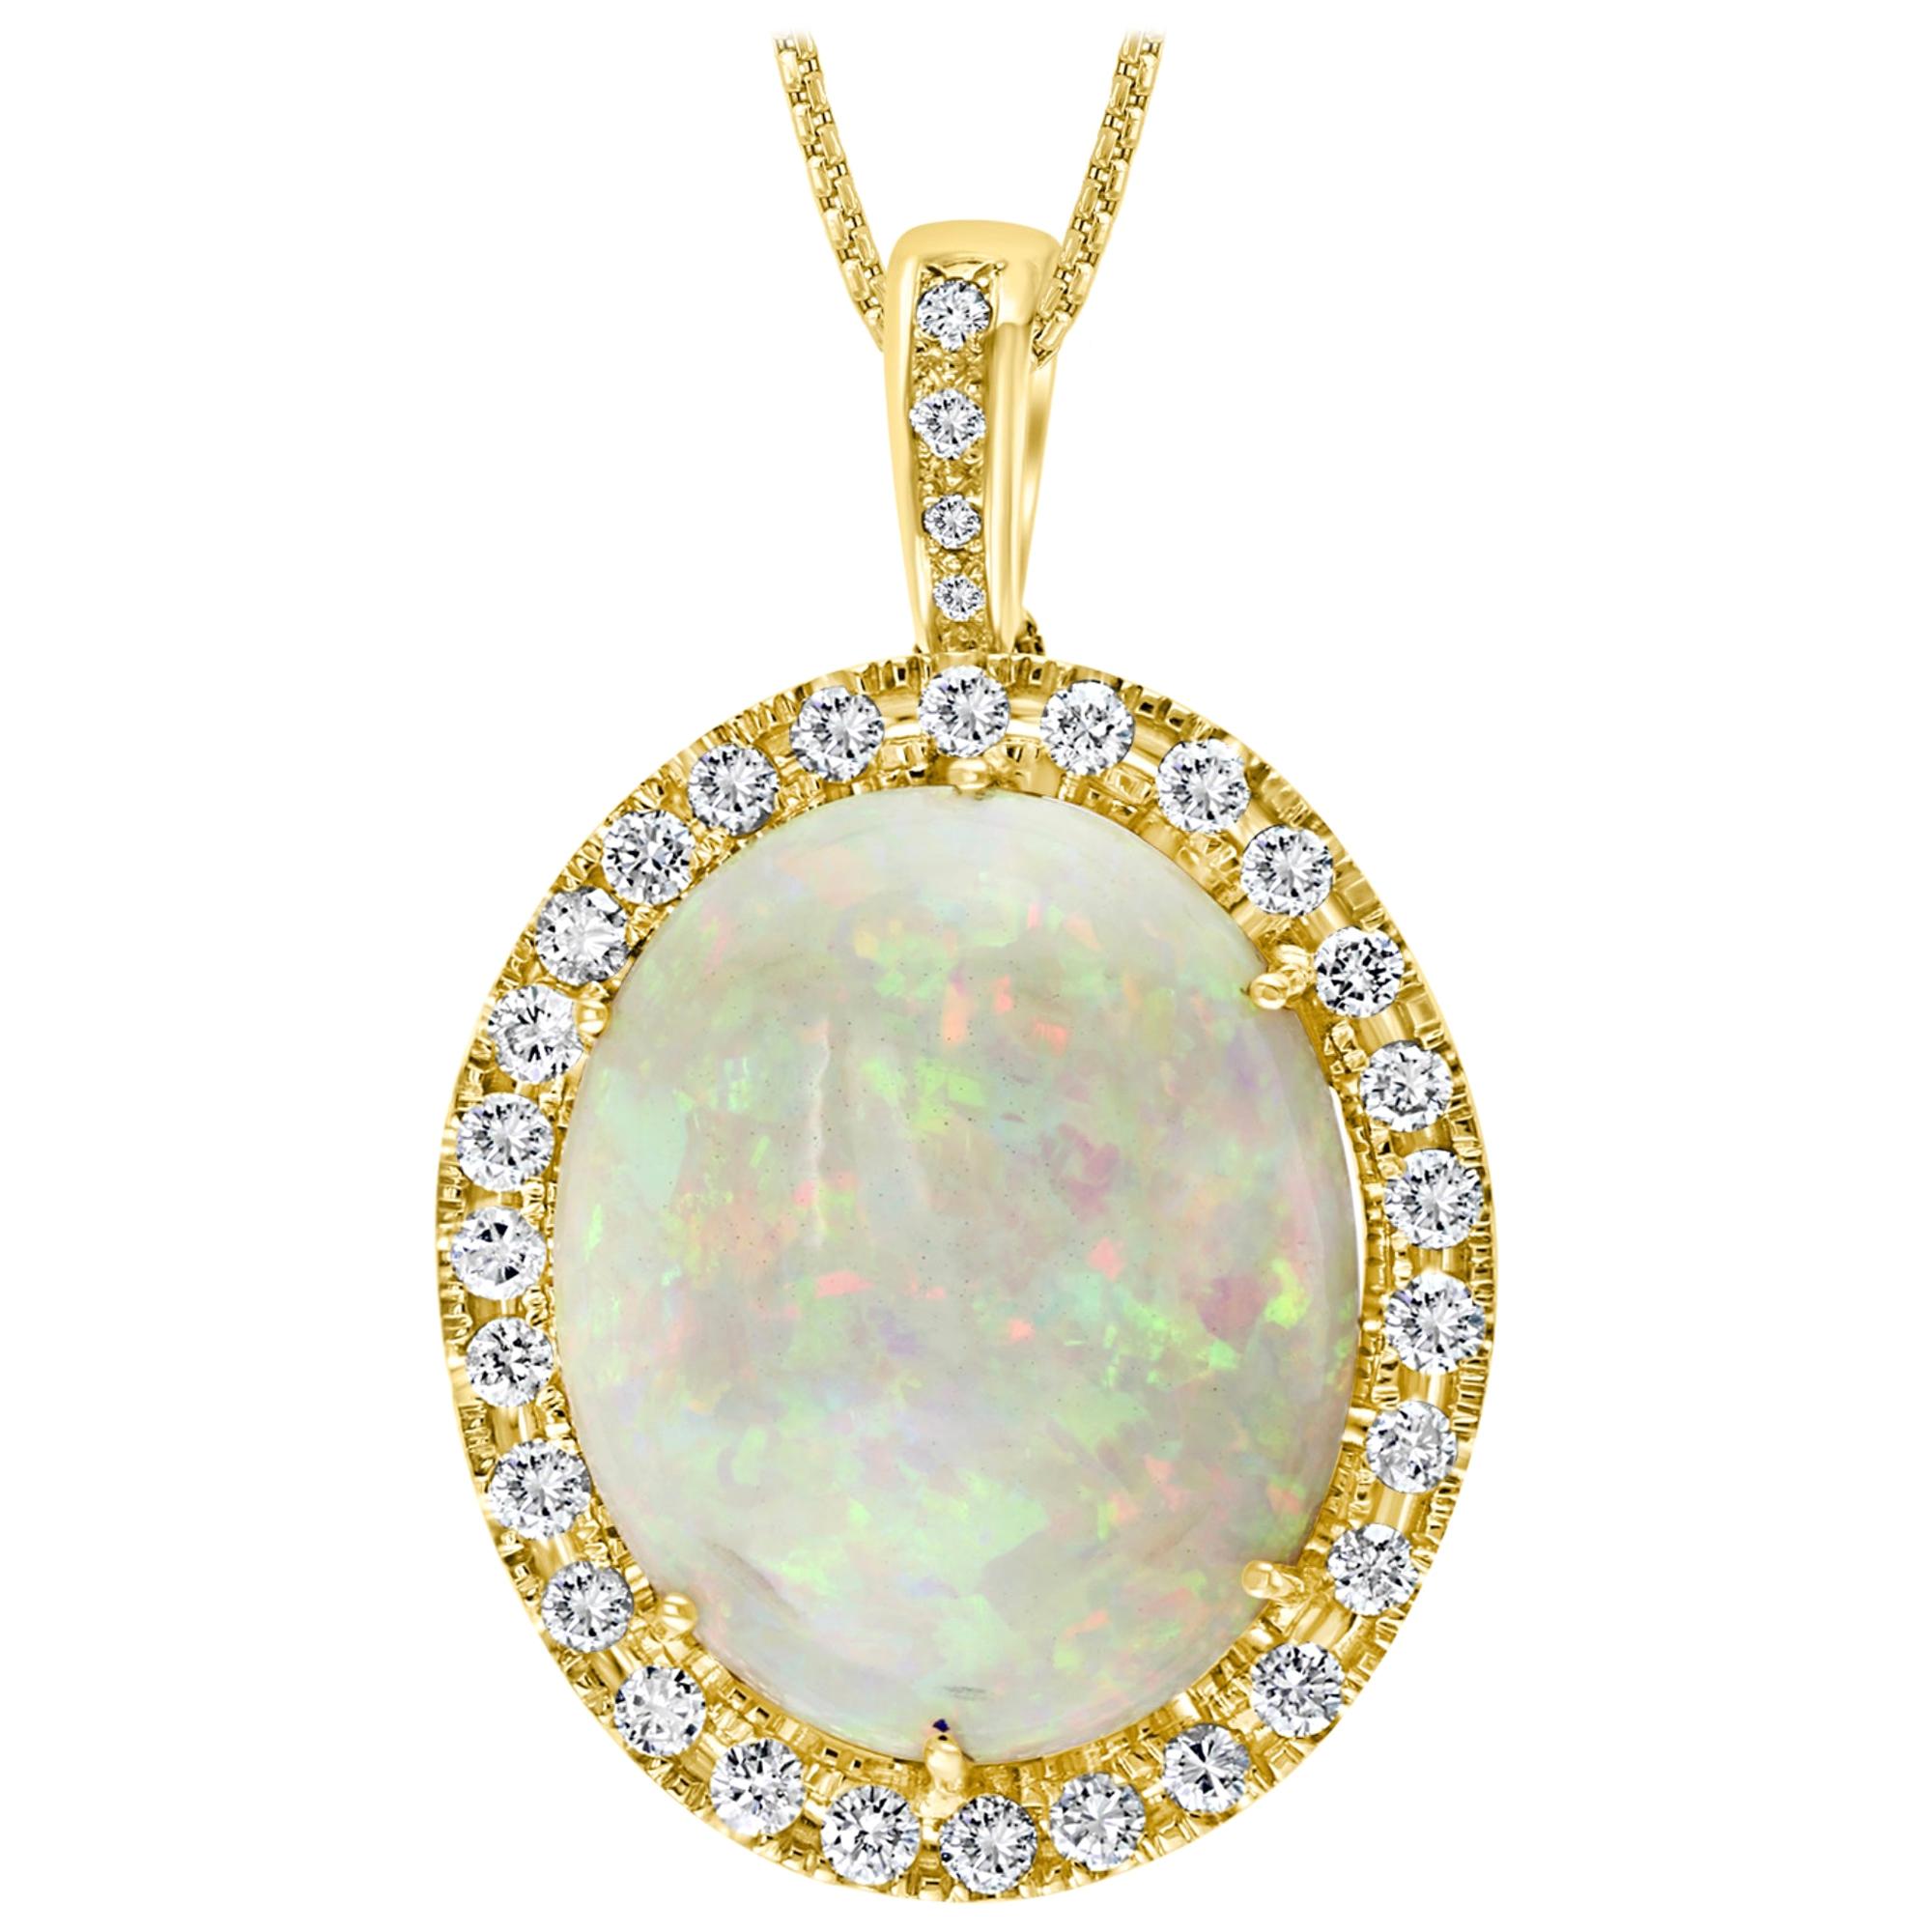 52 Carat Oval Ethiopian Opal and Diamond Pendant / Necklace 18 Karat Gold Estate